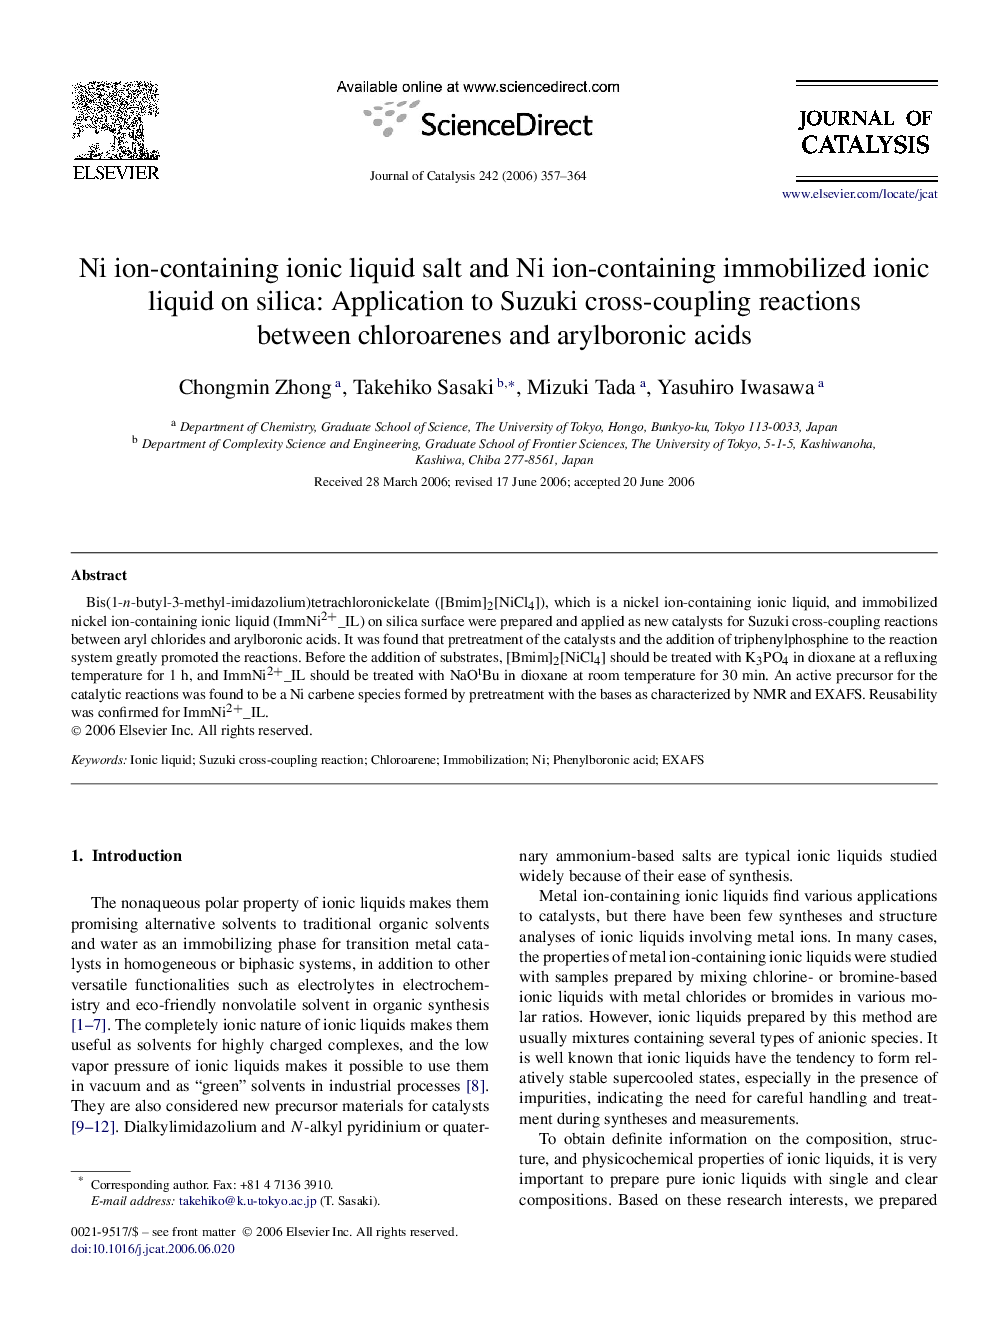 Ni ion-containing ionic liquid salt and Ni ion-containing immobilized ionic liquid on silica: Application to Suzuki cross-coupling reactions between chloroarenes and arylboronic acids